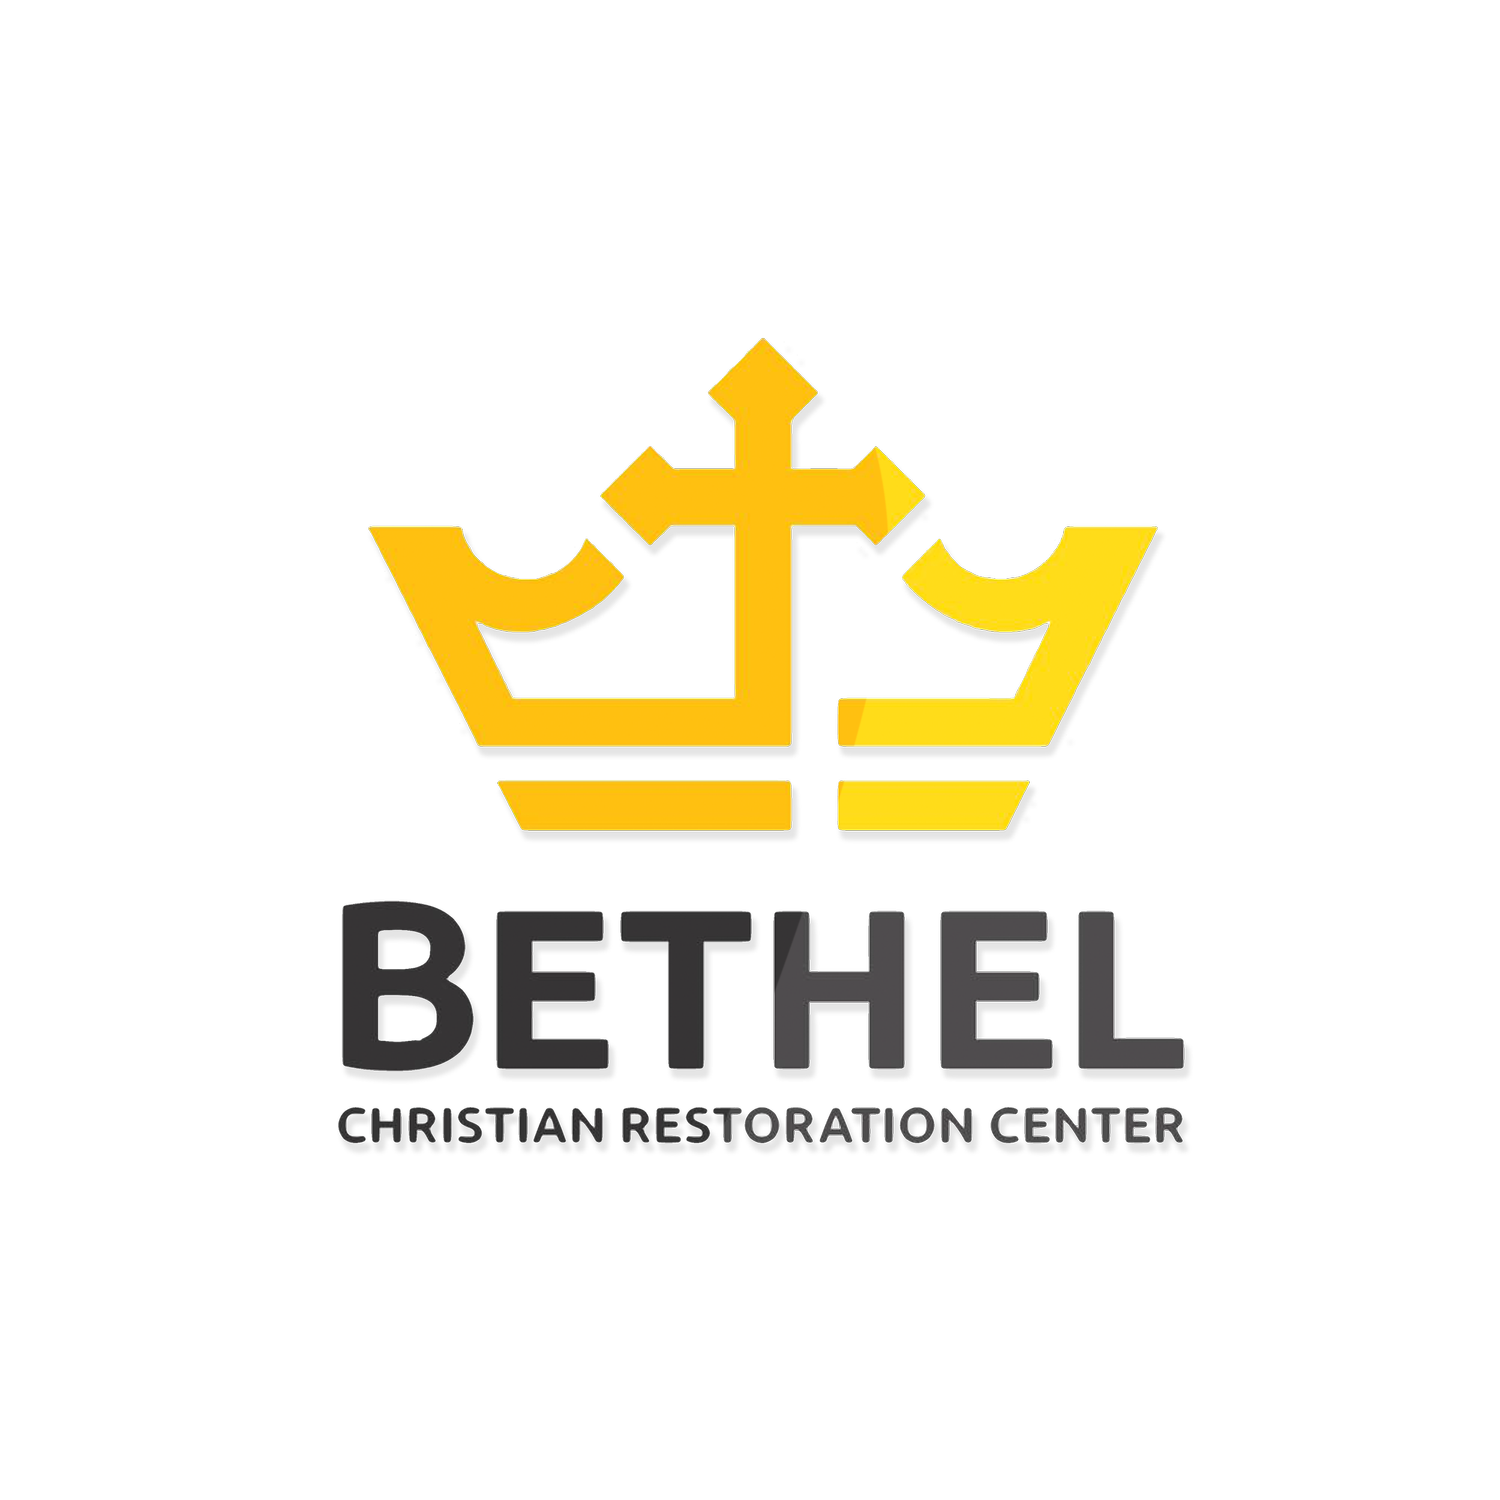 Bethel Christian Restoration Center